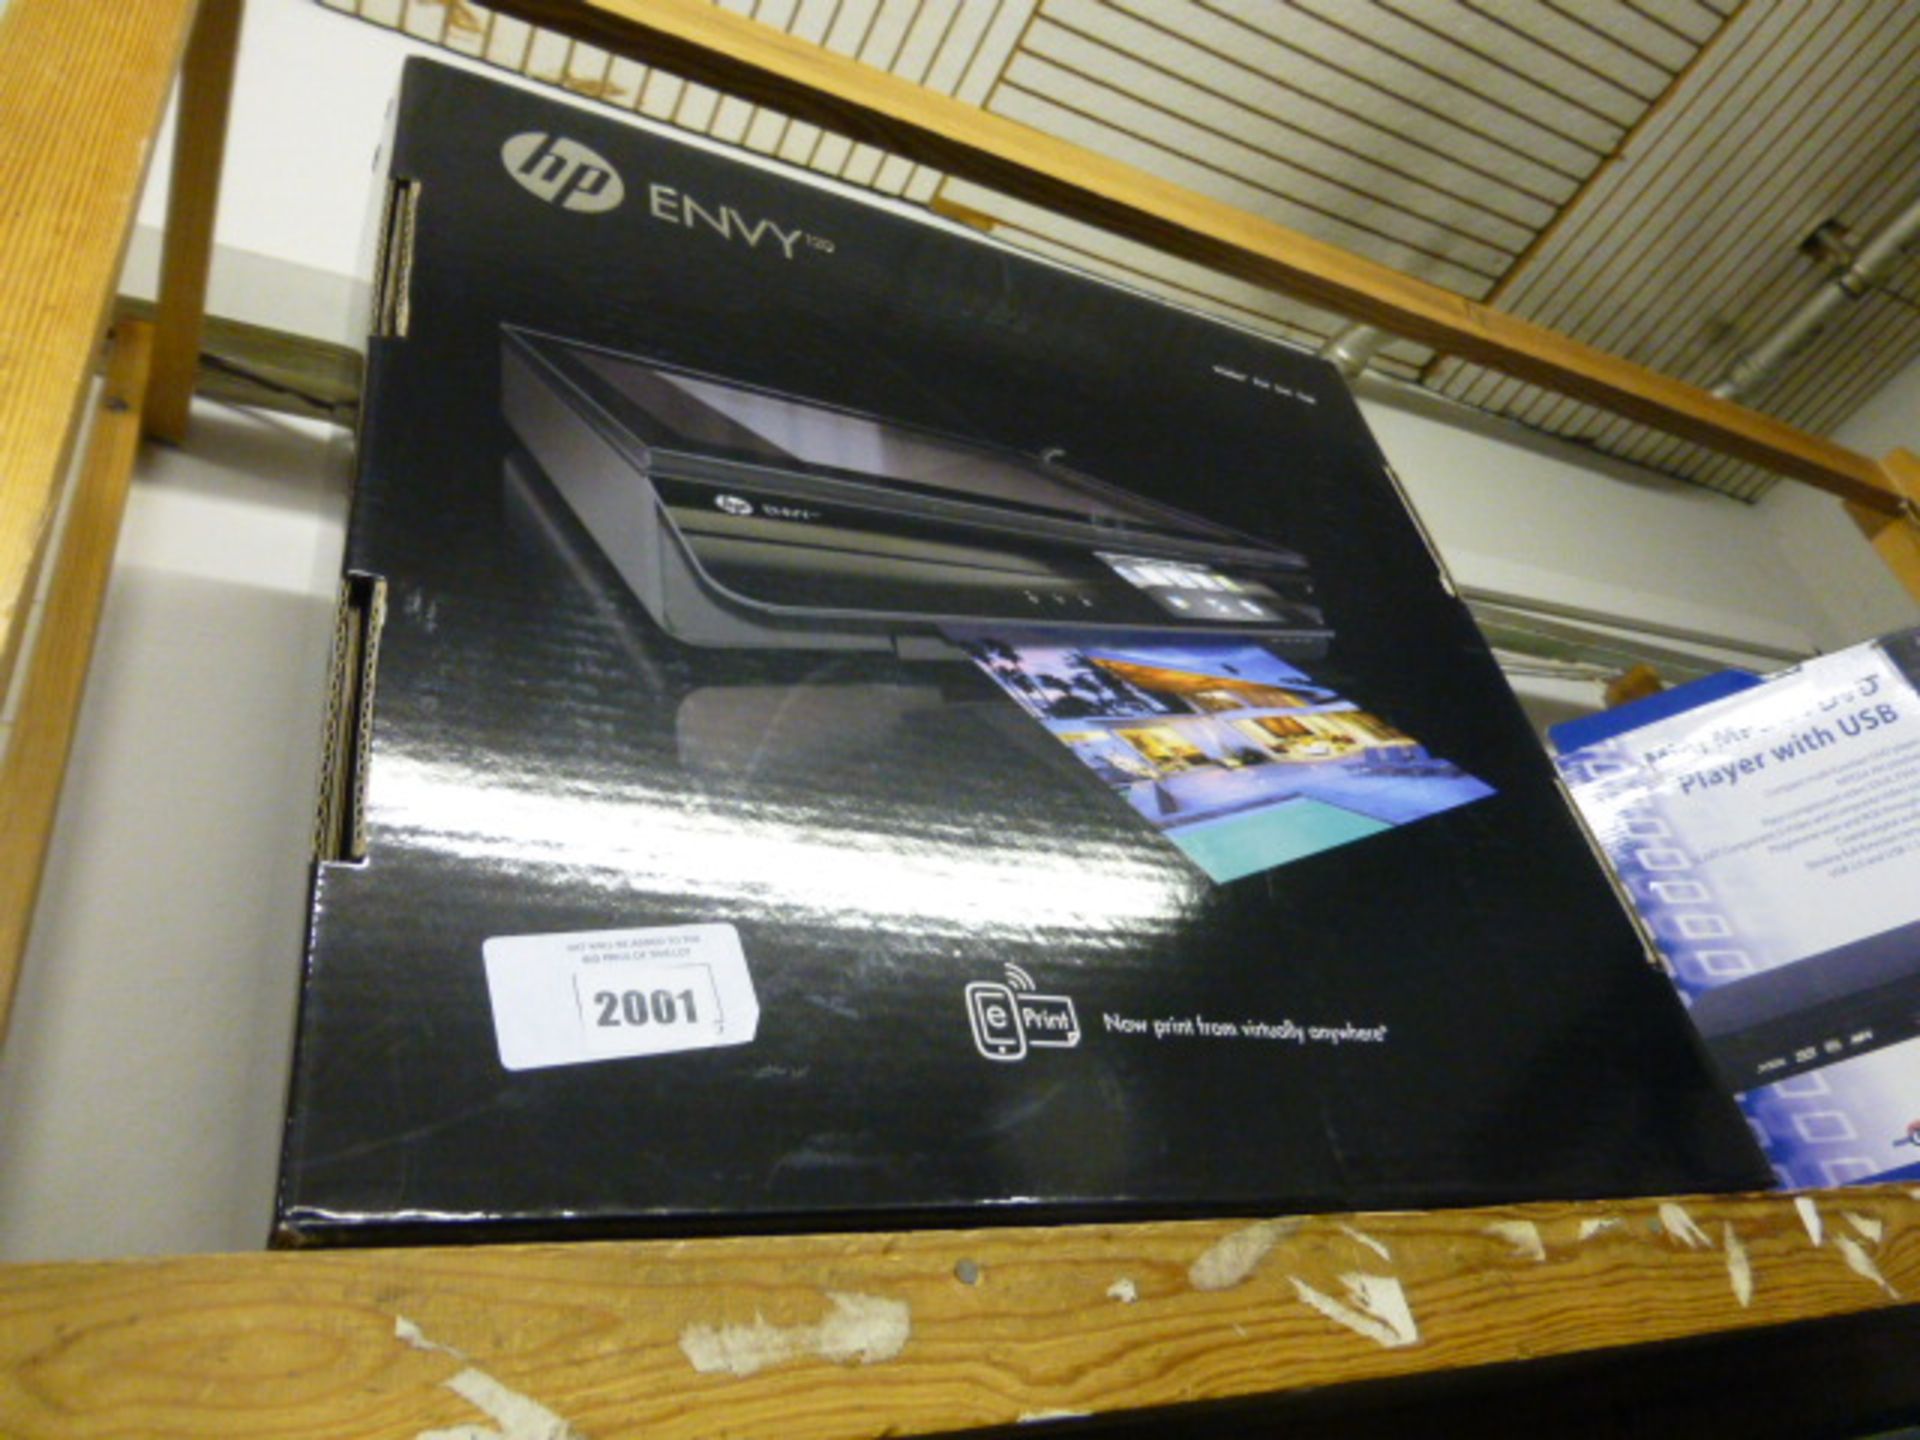 HP Envy 120 wireless all in one printer in box